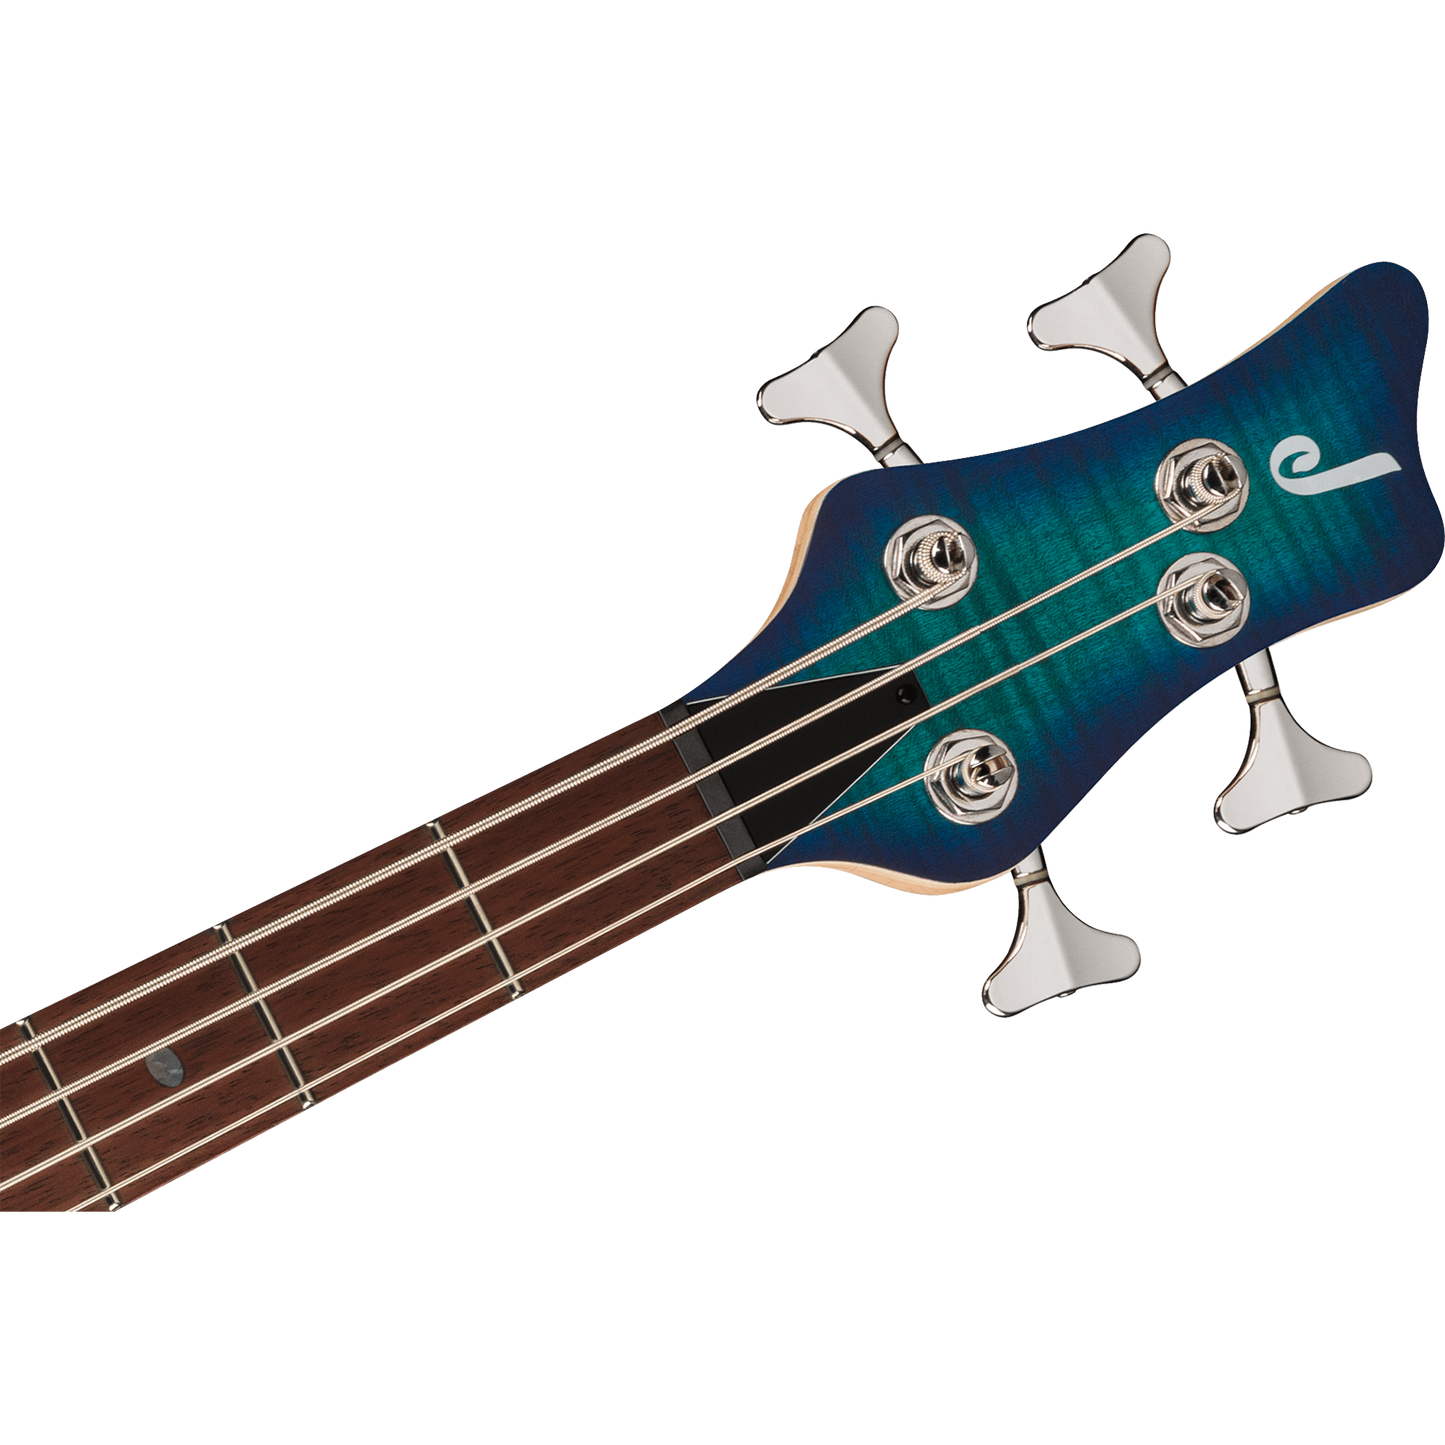 Jackson Pro Series Spectra Bass SBFM IV Bass Guitar, Chlorine Burst